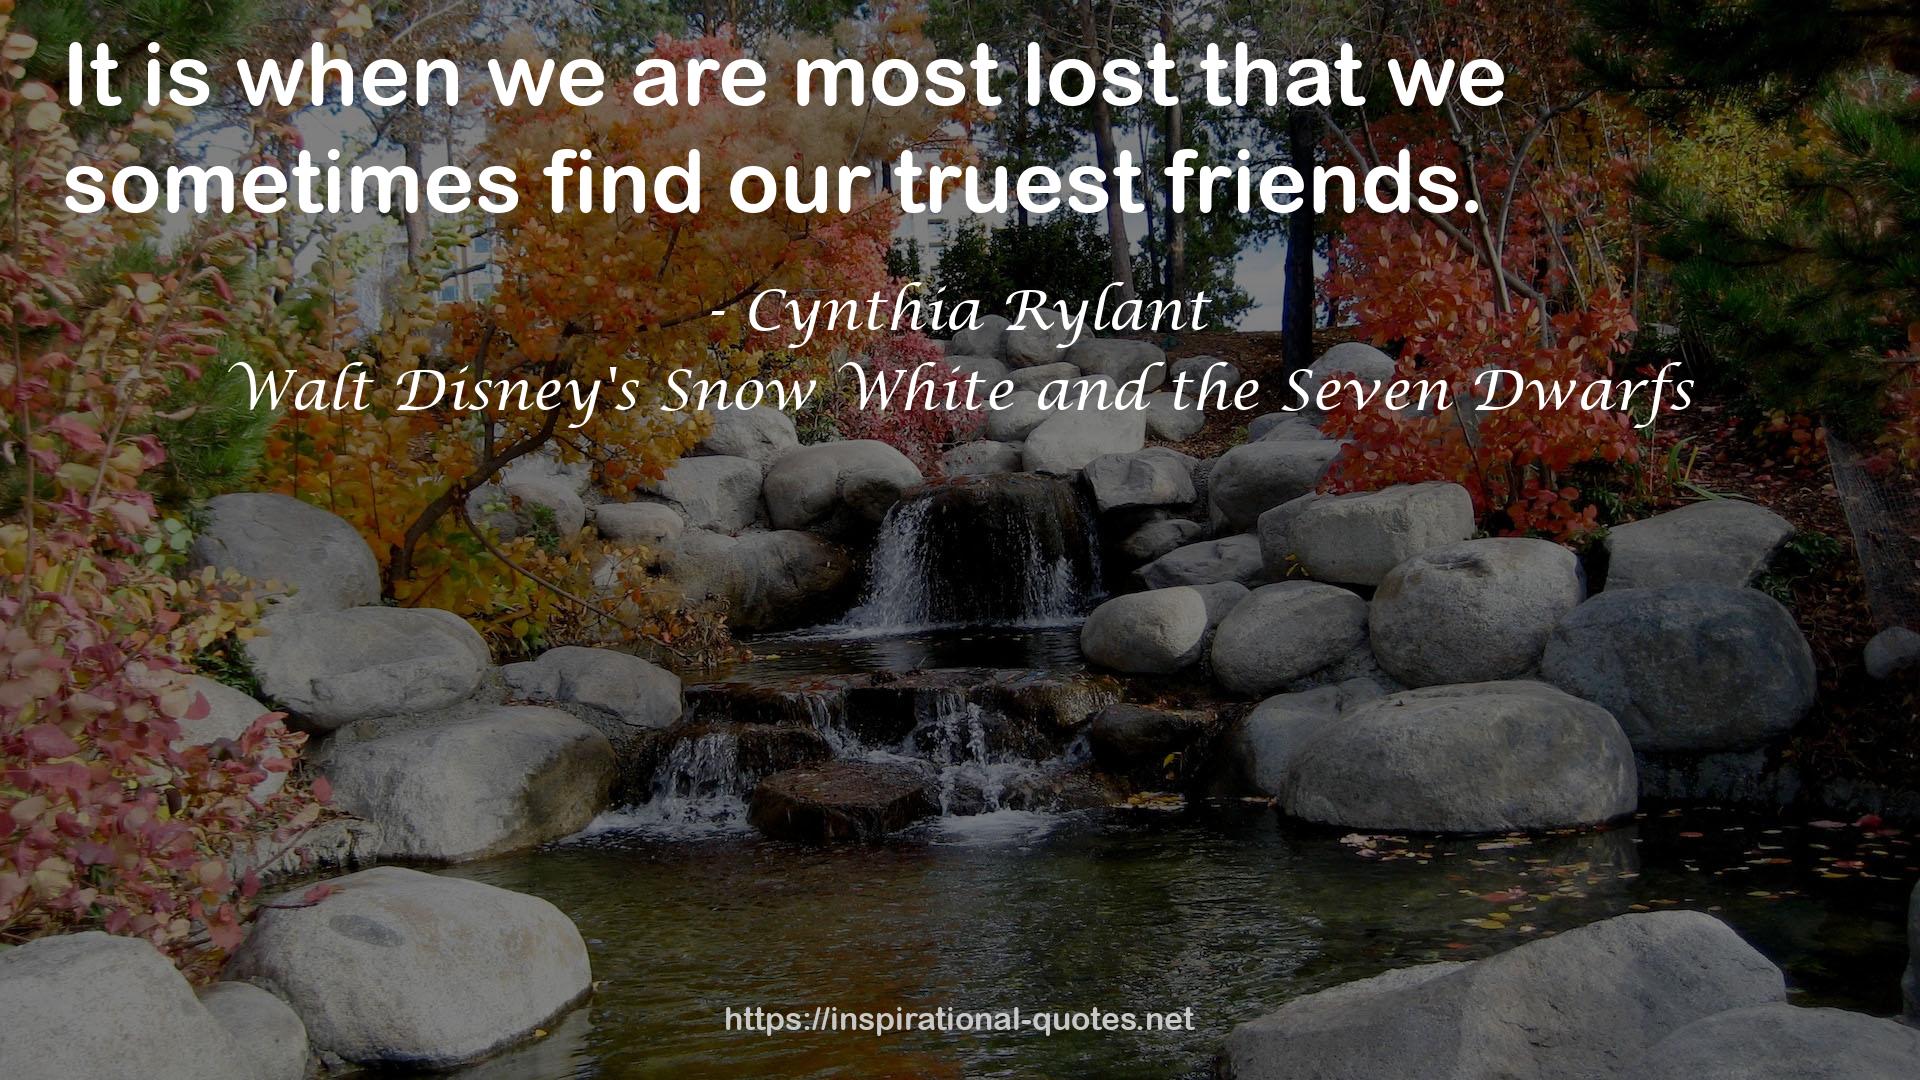 Walt Disney's Snow White and the Seven Dwarfs QUOTES